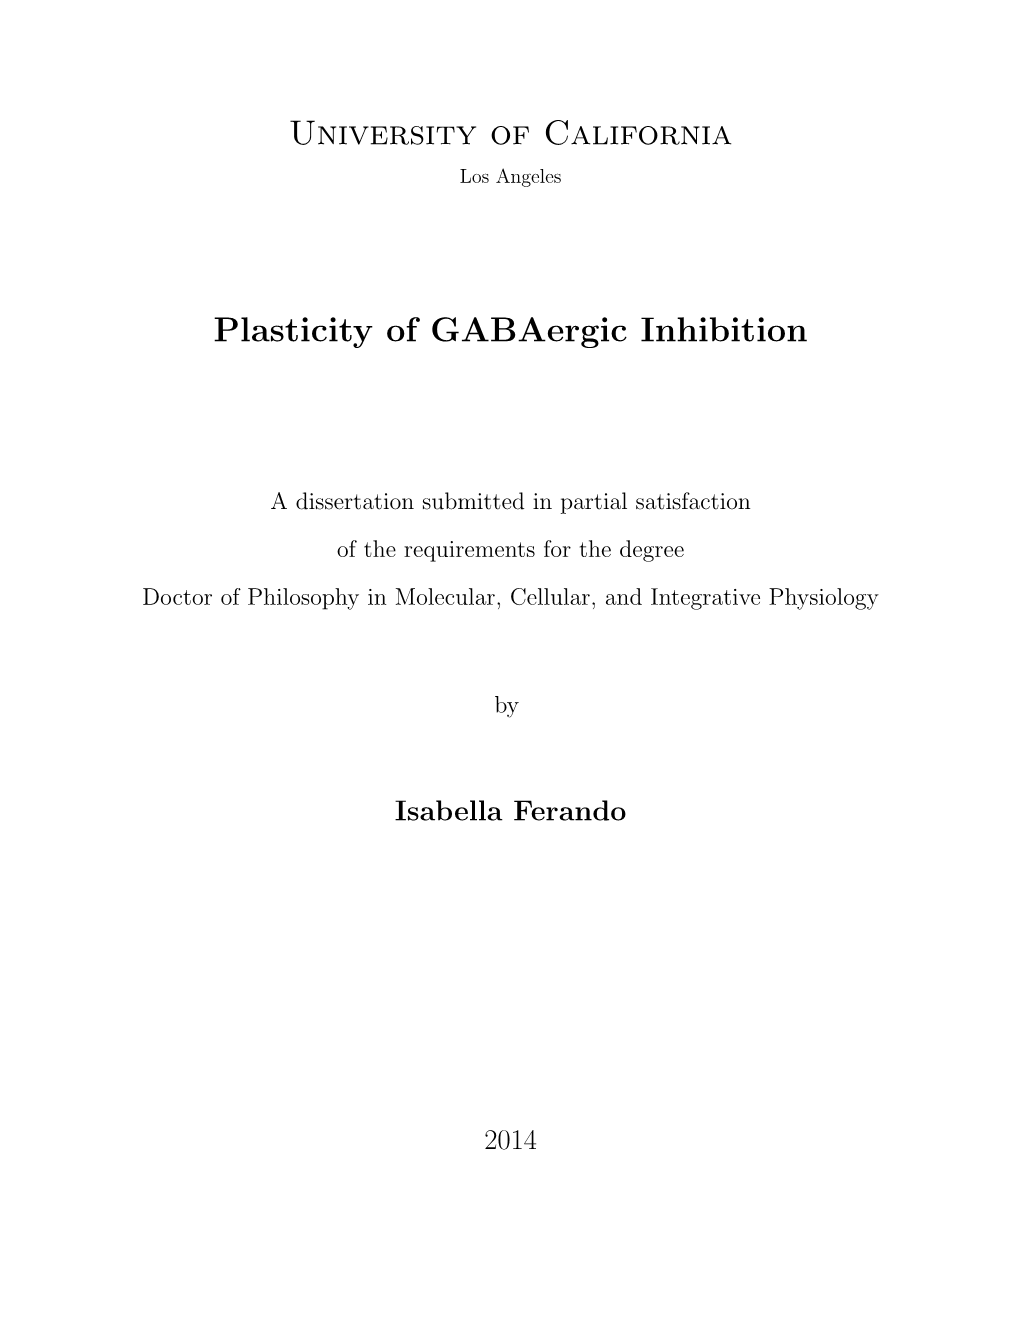 University of California Plasticity of Gabaergic Inhibition